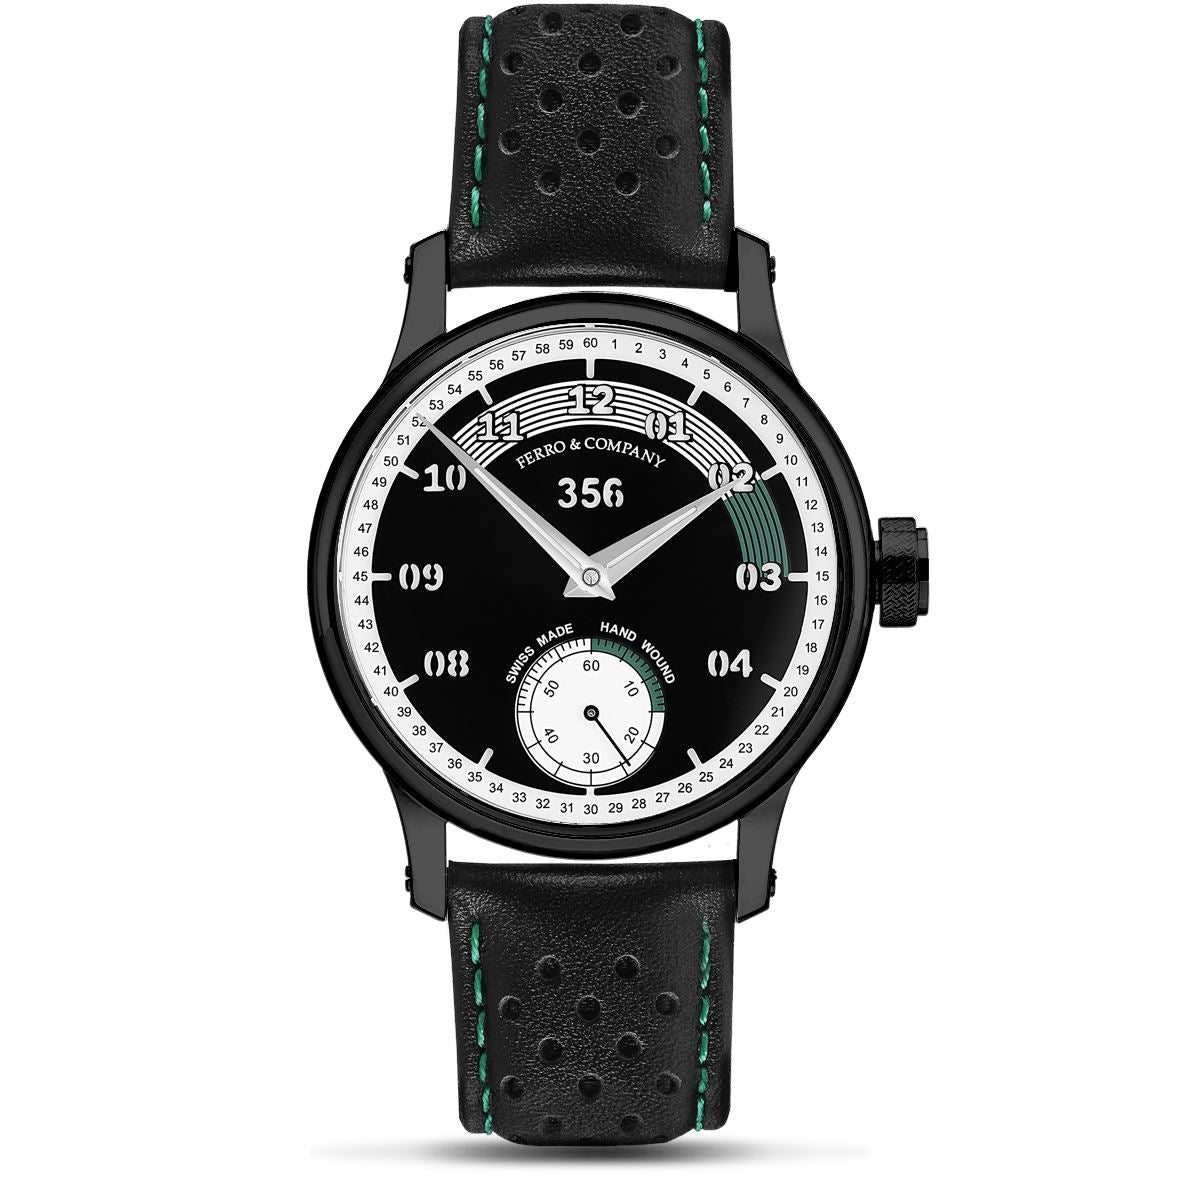 Ferro Watches 356 Vintage Style Race Watch Black / Green - Ferro &amp; Company Watches